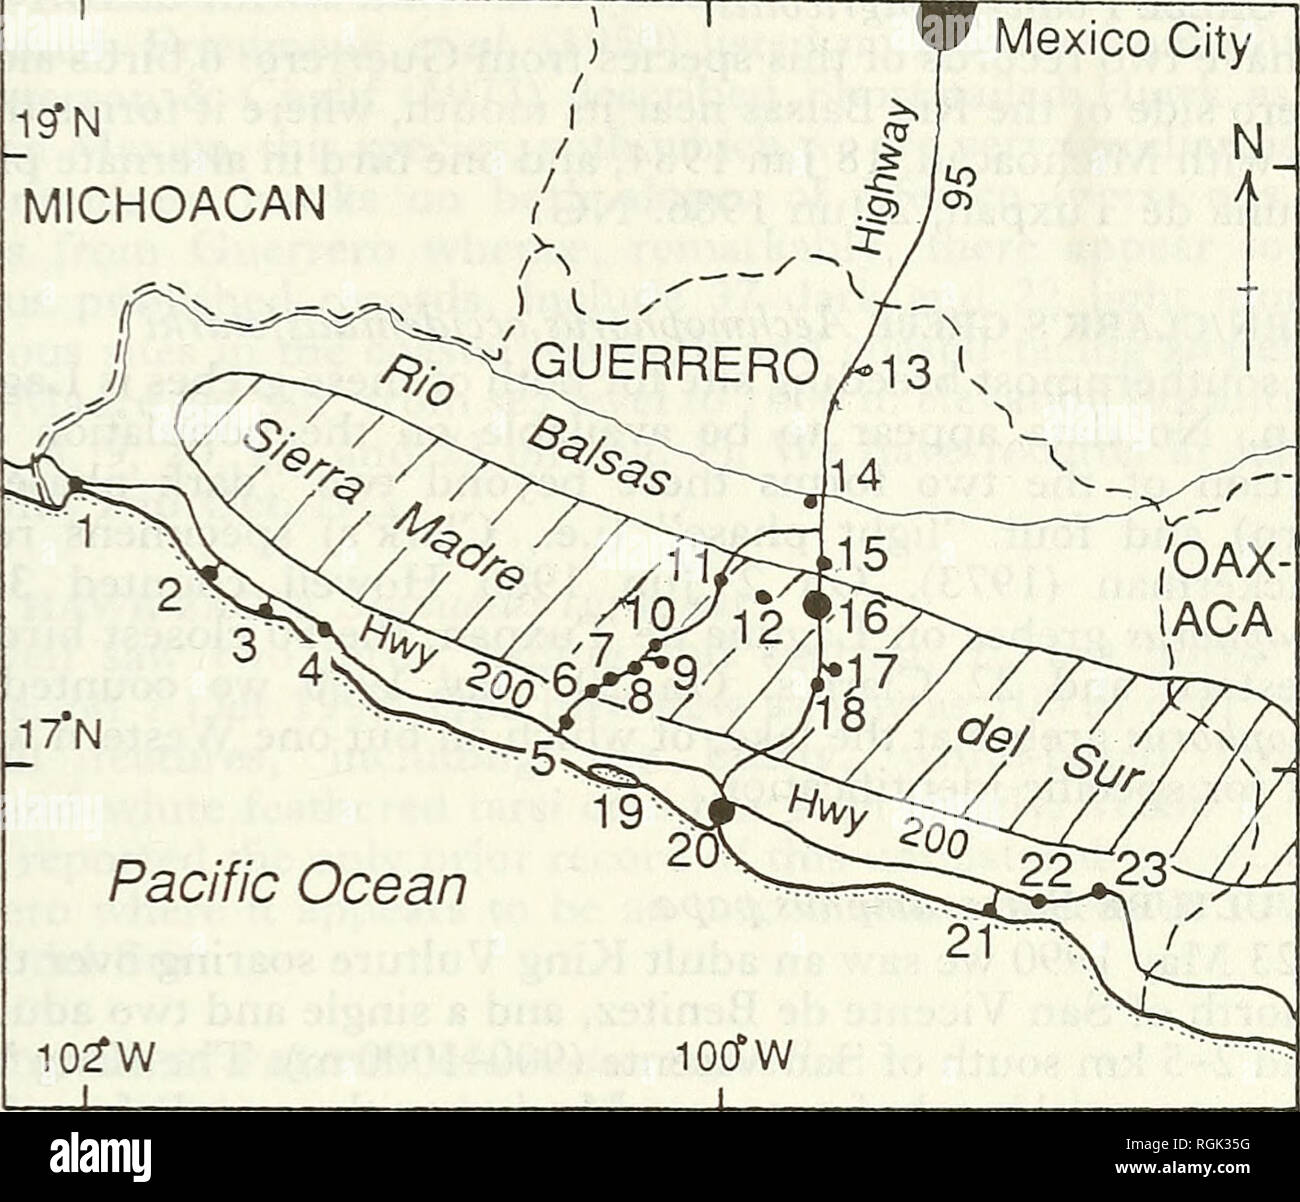 . Bulletin of the British Ornithologists' Club. Birds. 5. AT. G. Howell &amp; S. Webb 233 Bull. B.O.C. 1994 114(4)  r Mexico City 1STN MICHOACAN. Pacific Ocean 10?W Figure 1. The state of Guerrero, Mexico, showing places mentioned in the species accounts. 1, Petacalco; 2, Zihuatanejo; 3, Barra de Potosi; 4, Petatlan; 5, Atoyac; 6, Rio Santiago; 7, San Vicente de Benitez; 8, Paraiso; 9, Arroyo Grande; 10, Nueva Delhi; 11, Filo de Caballo; 12, Omiltemi; 13, Laguna de Tuxpan 14, Mexcala; 15, Zumpango del Rio; 16, Chilpancingo; 17, Acahuizotla; 18, Agua de Obispo; 19, Laguna Mitla; 20, Acapulco;  Stock Photo